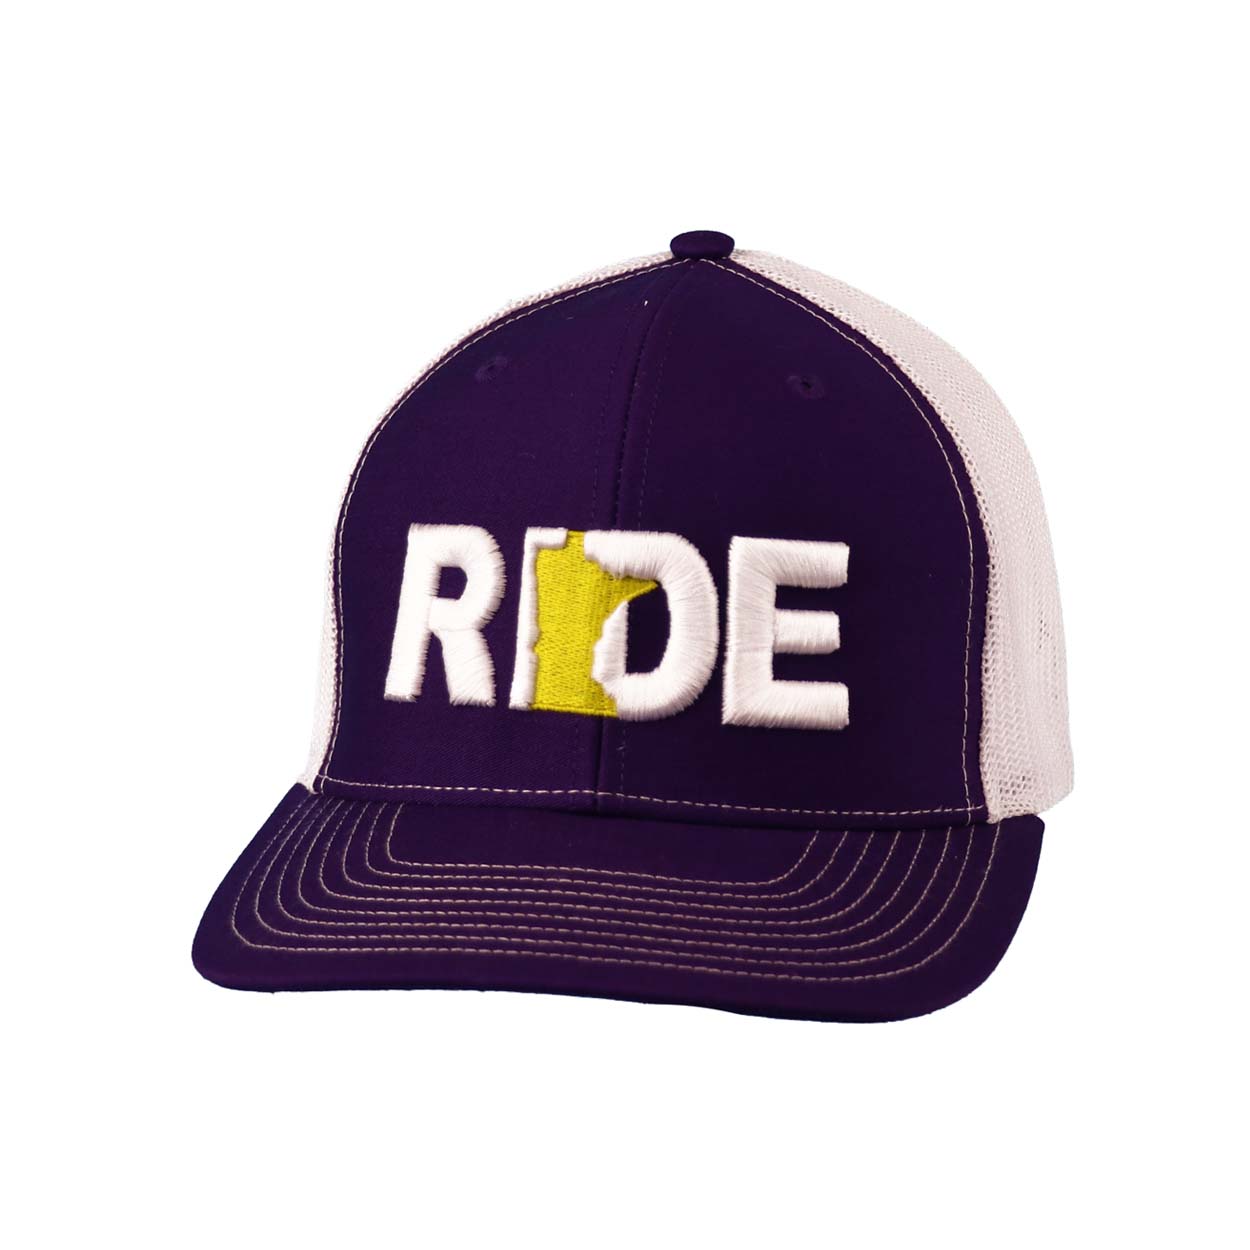 Ride Minnesota Classic Embroidered Snapback Trucker Hat Purple/White/Gold